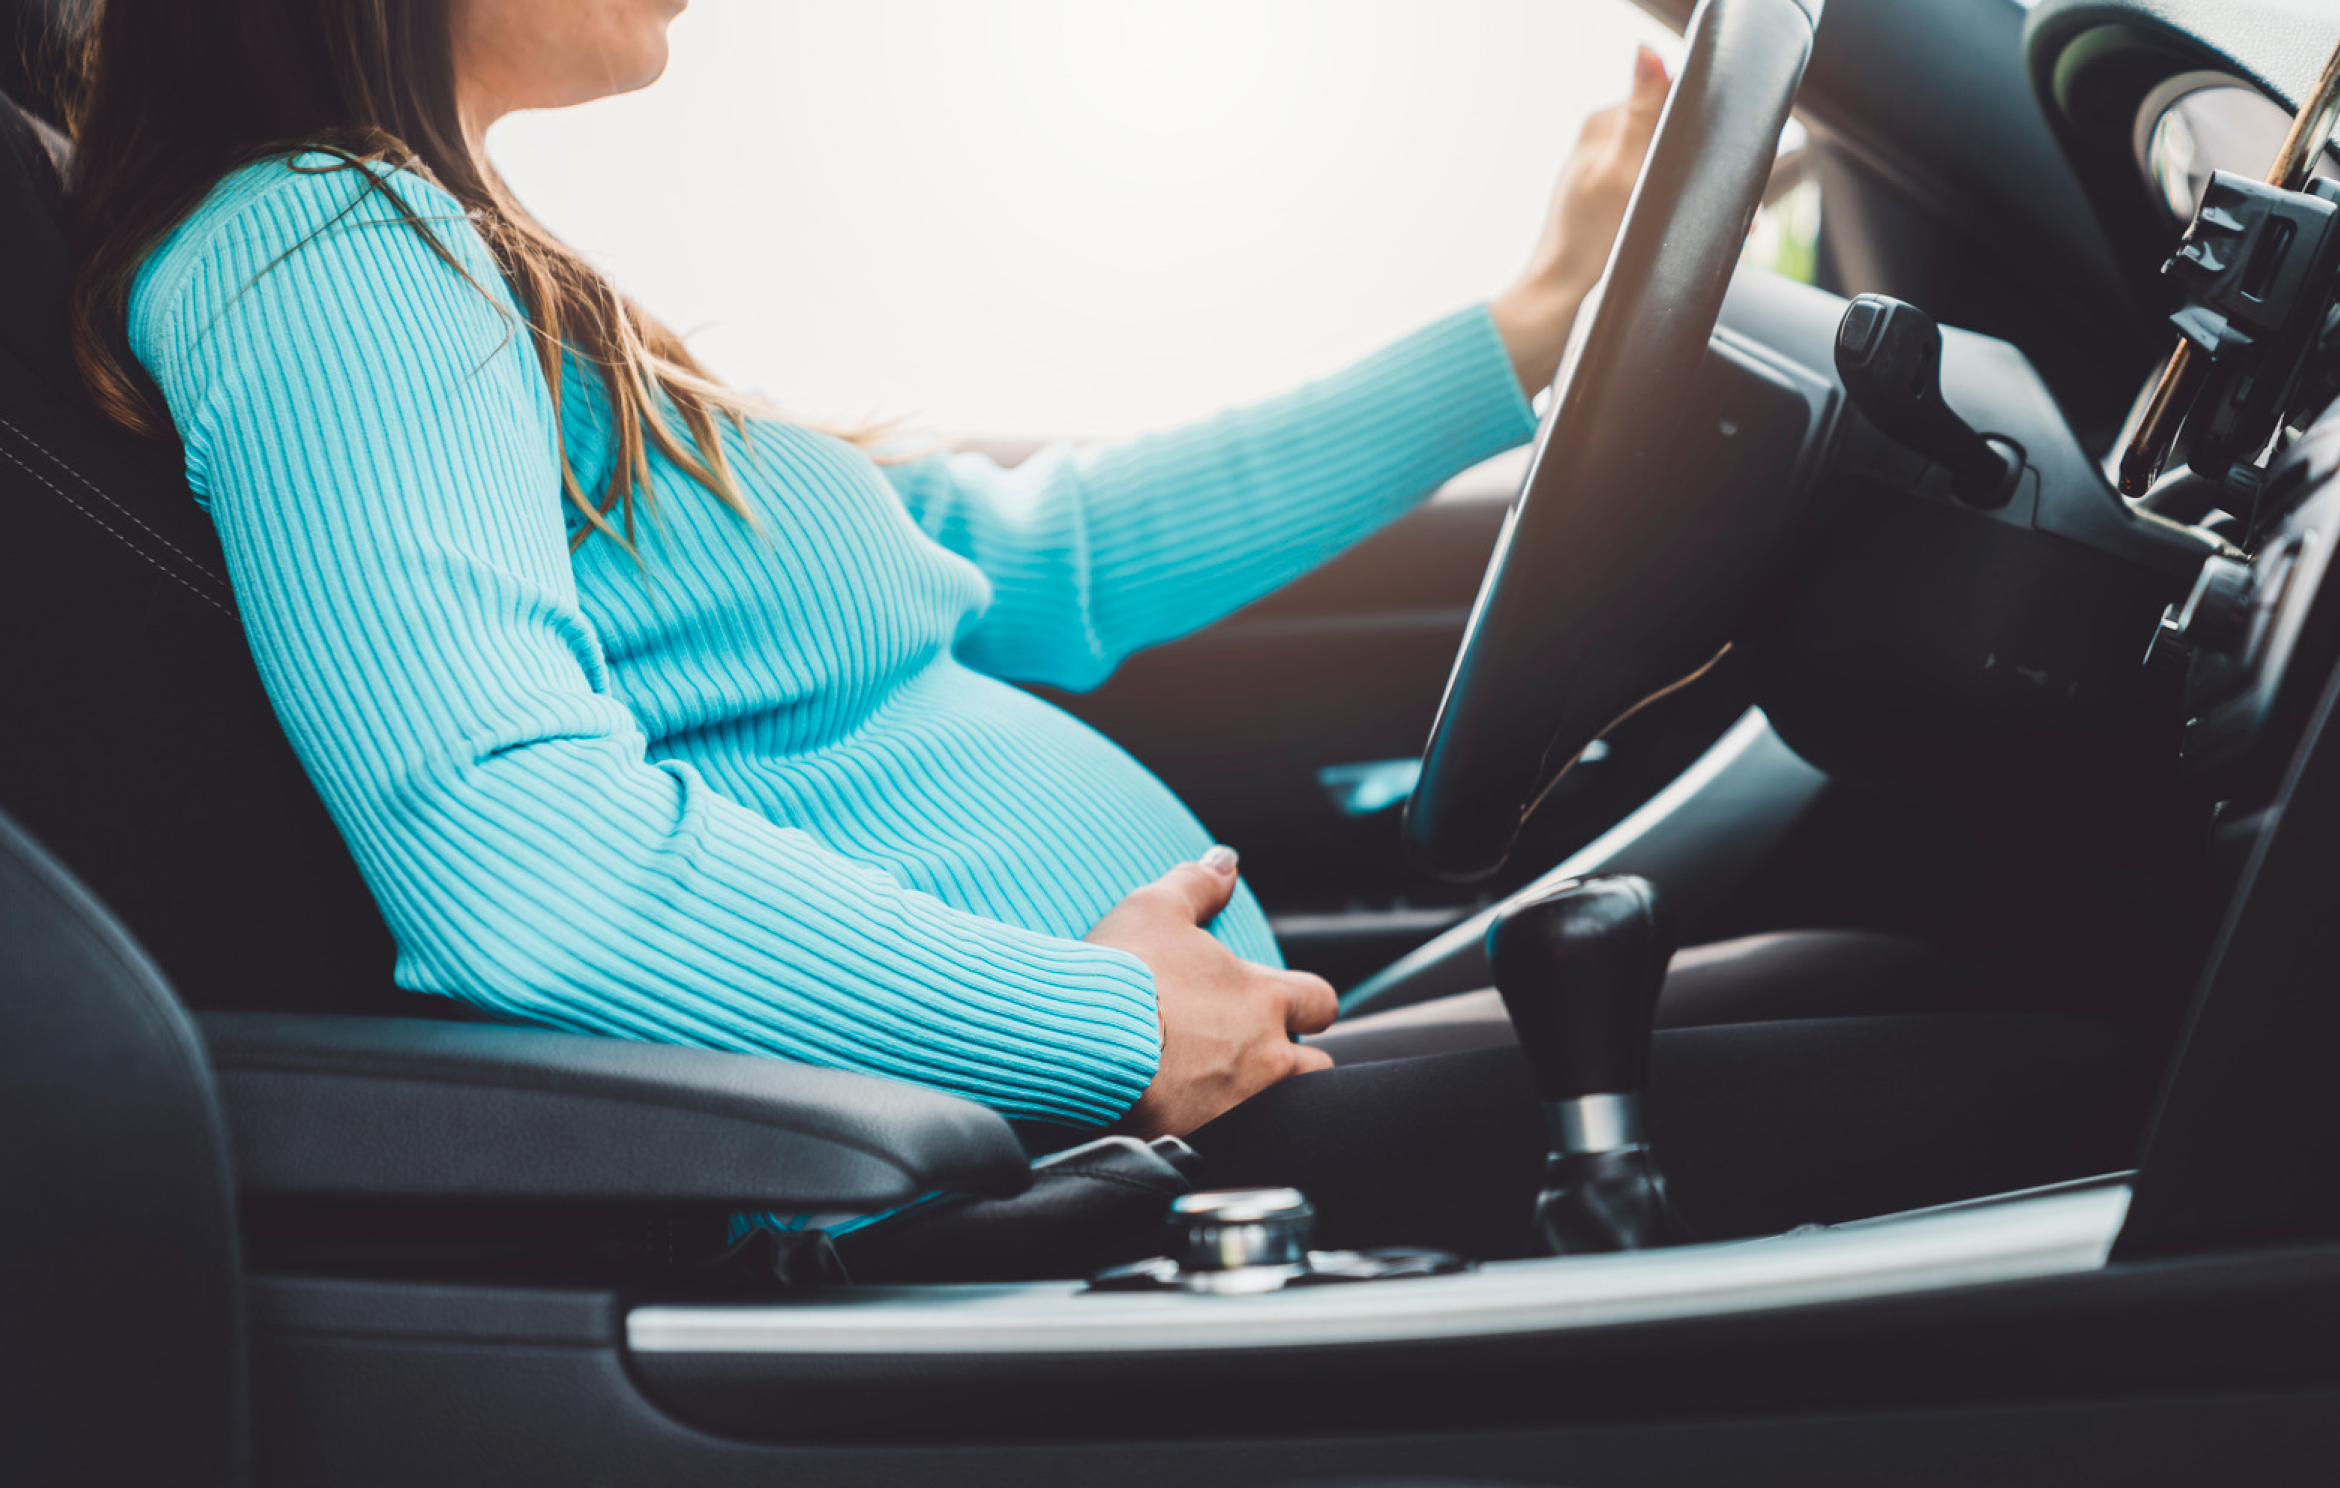 A pregnant woman driving